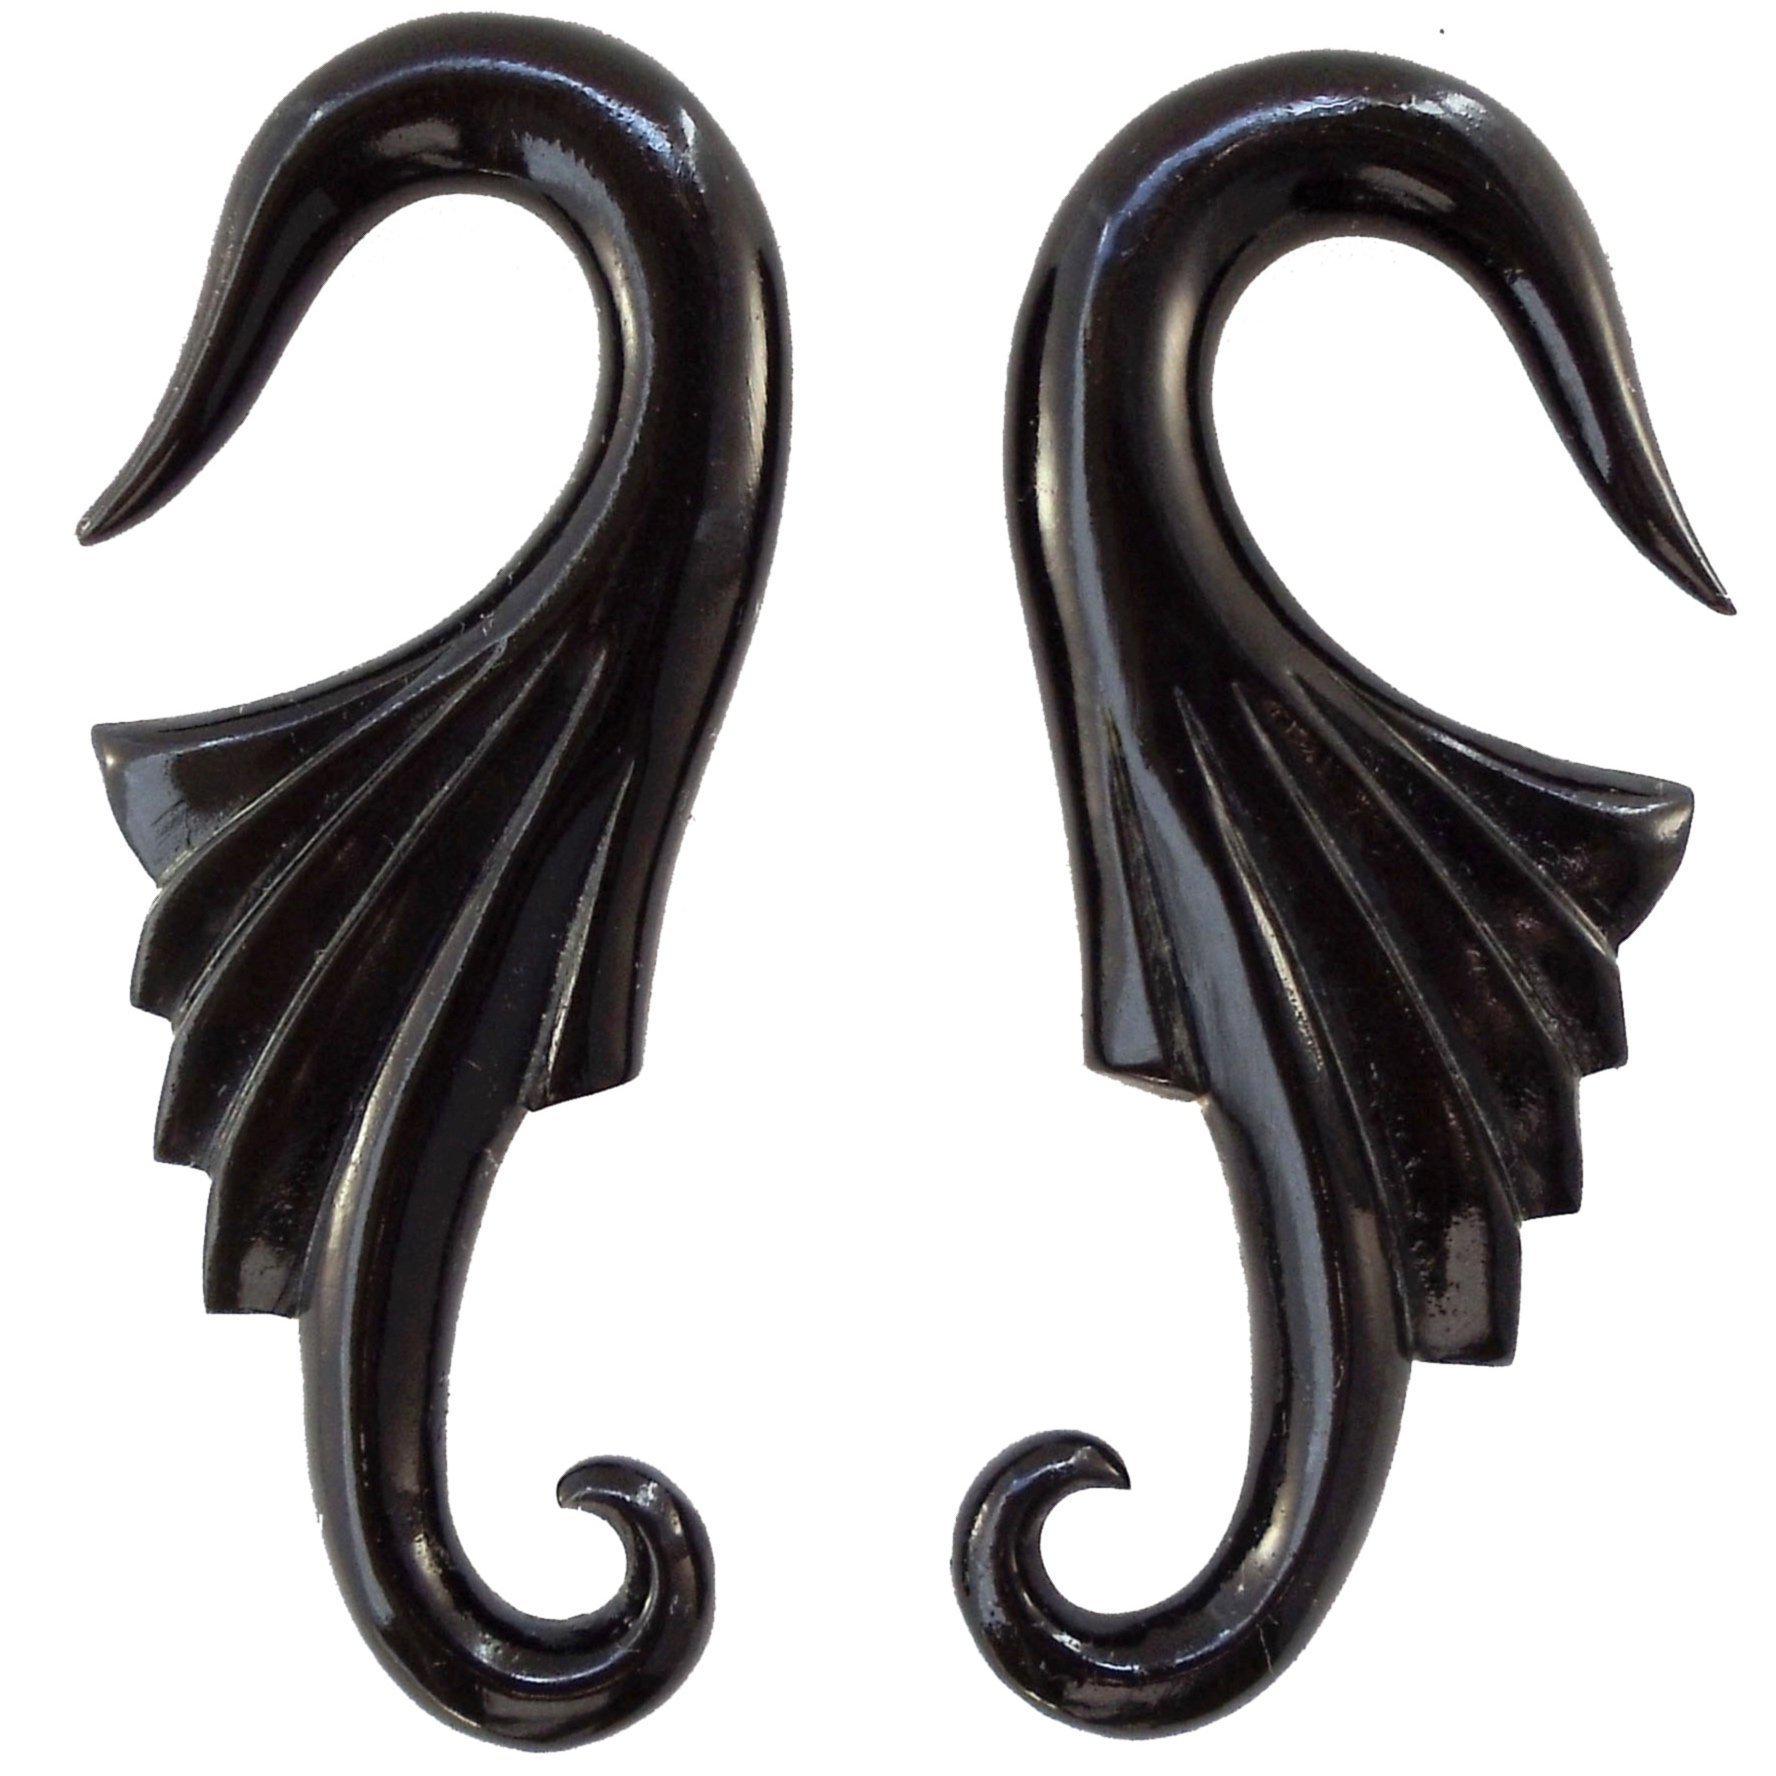 Gauges :|: Neuvo Wings, 2 gauge, Horn. 7/8 inch W X 2 1/4 inch L. | 2 Gauge Earrings